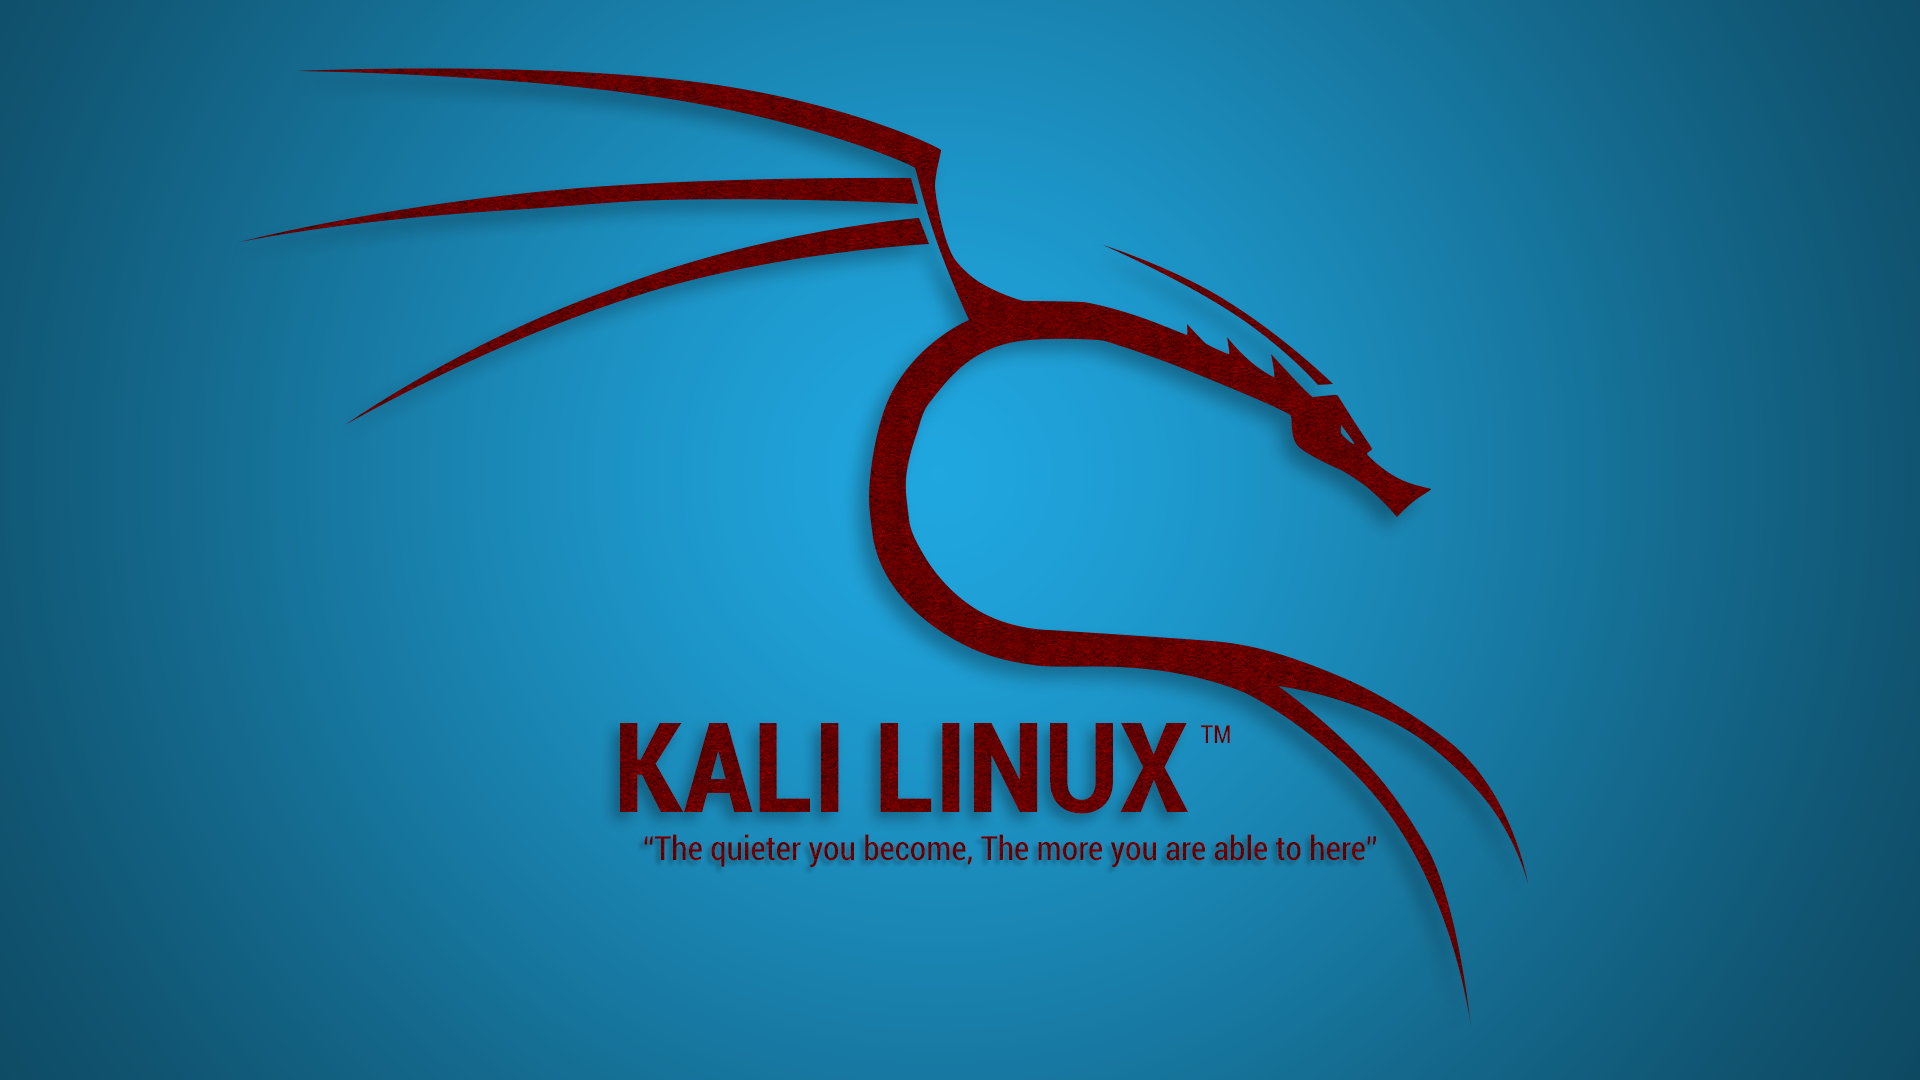 ZIIXON93. Linux, Vendetta quotes, Kali